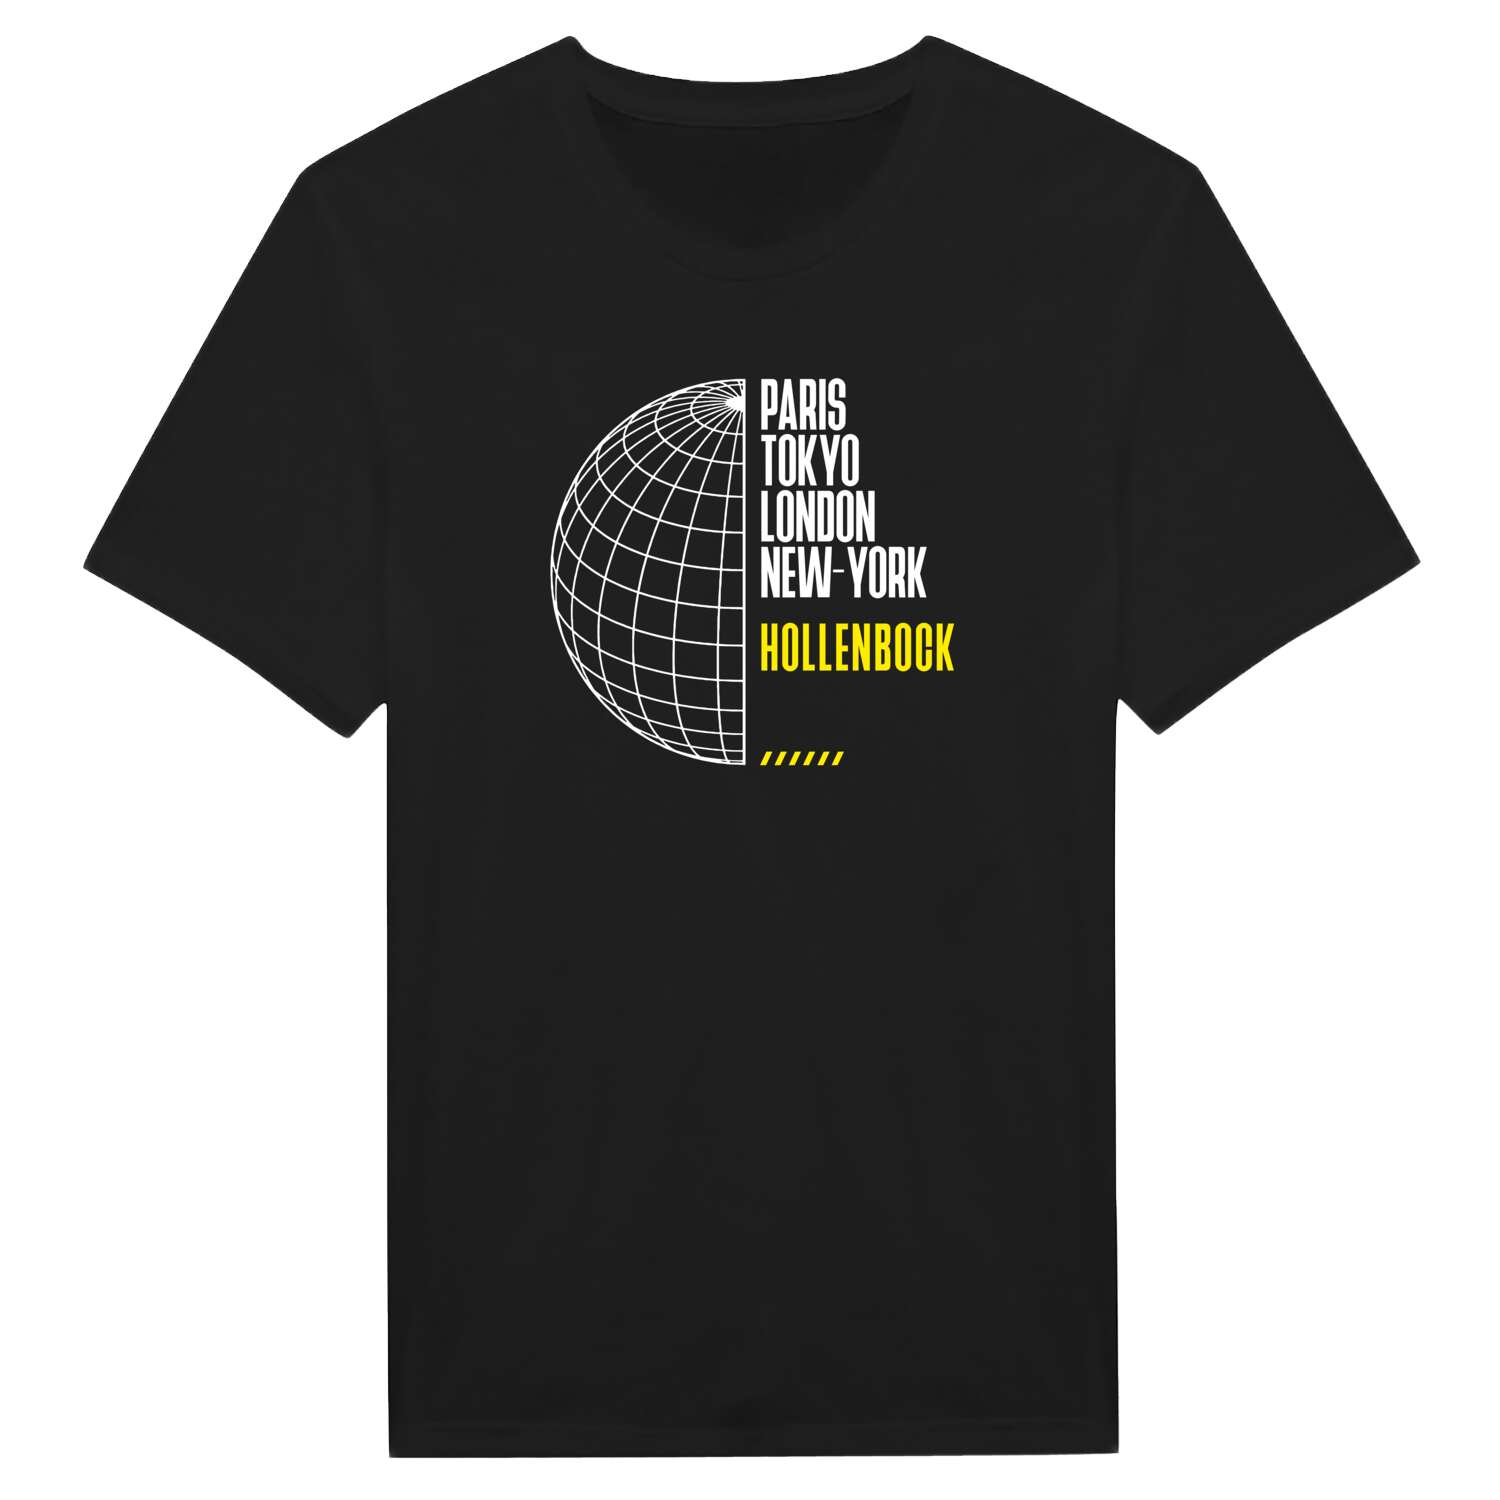 Hollenbock T-Shirt »Paris Tokyo London«